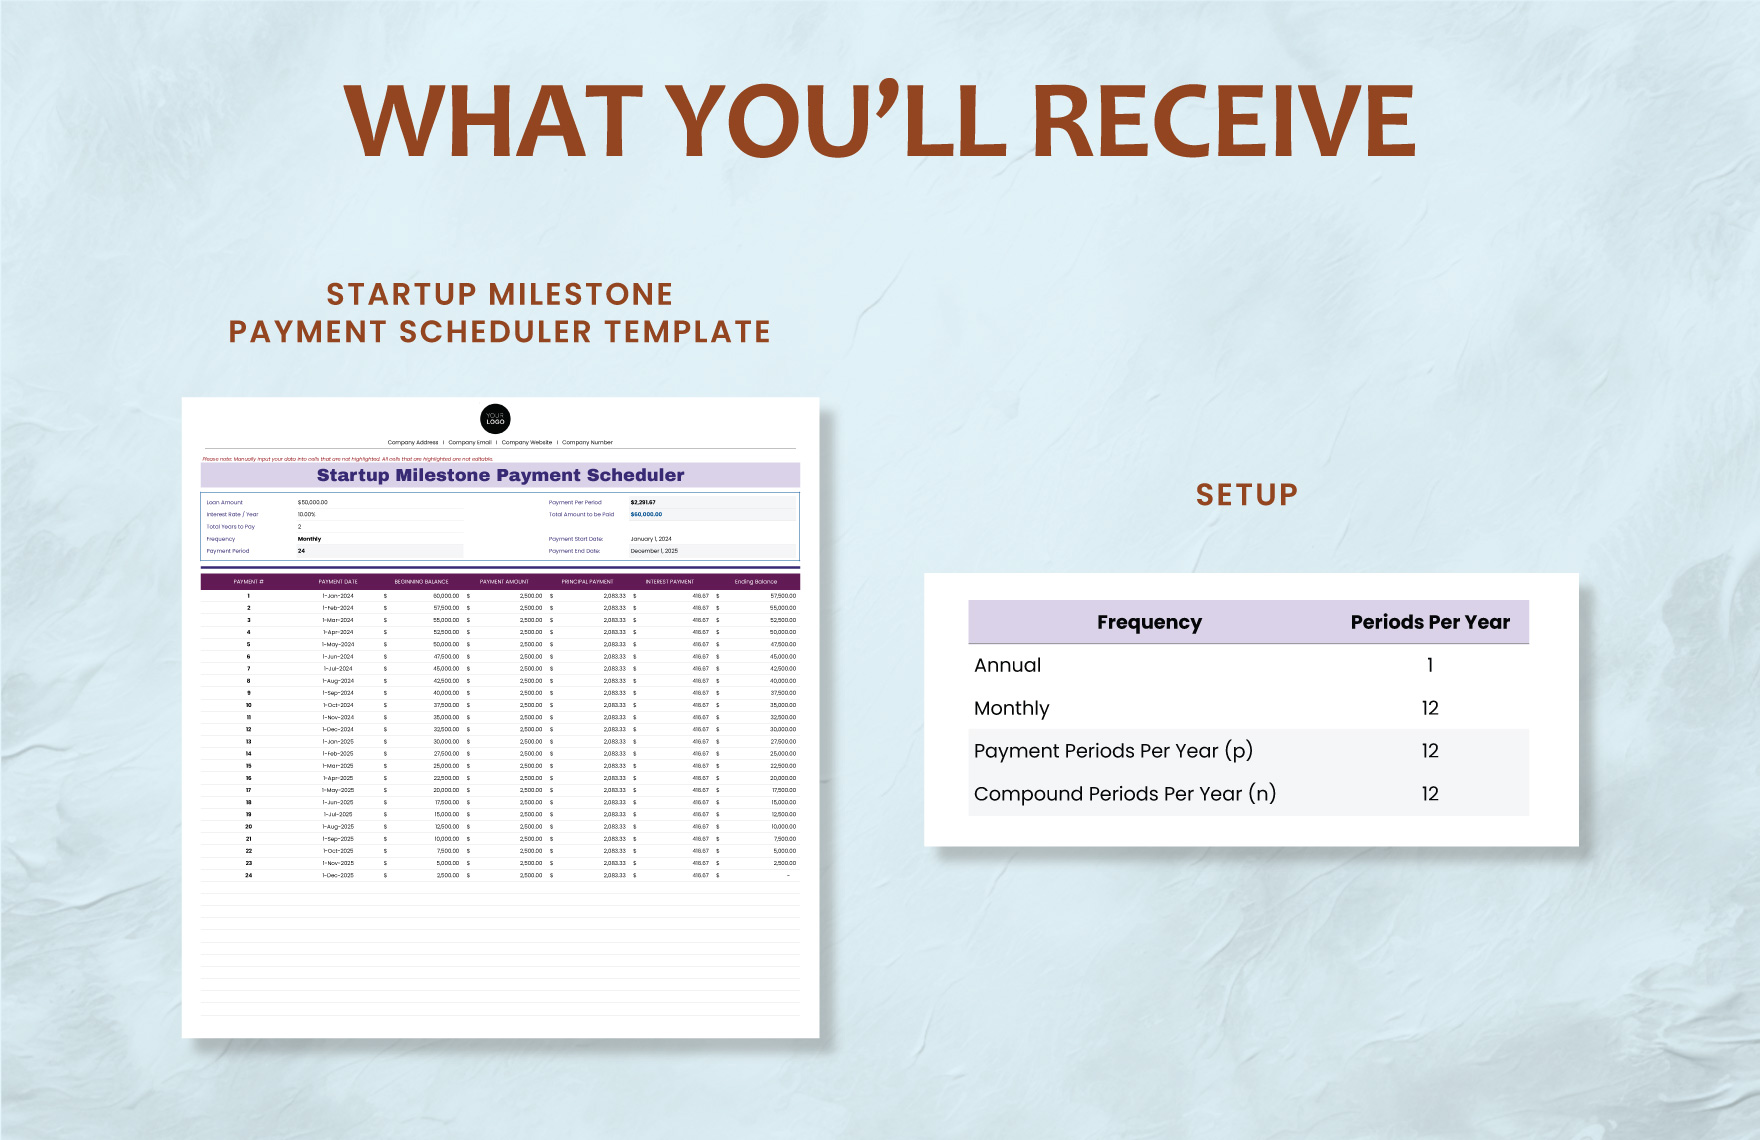 Startup Milestone Payment Scheduler Template